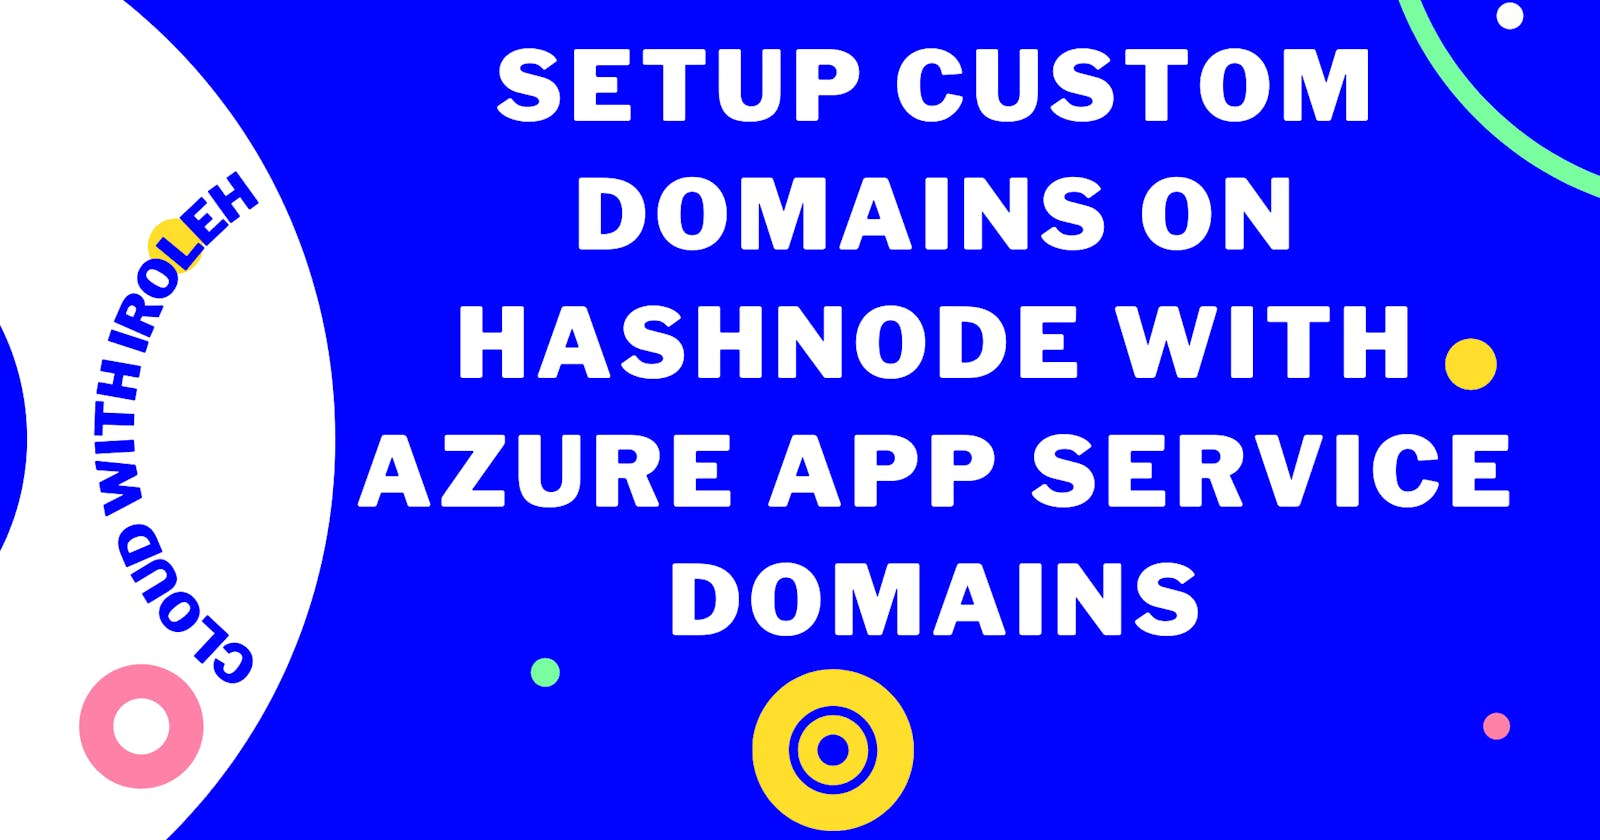 Setup custom domains on hashnode with Azure App Service Domains